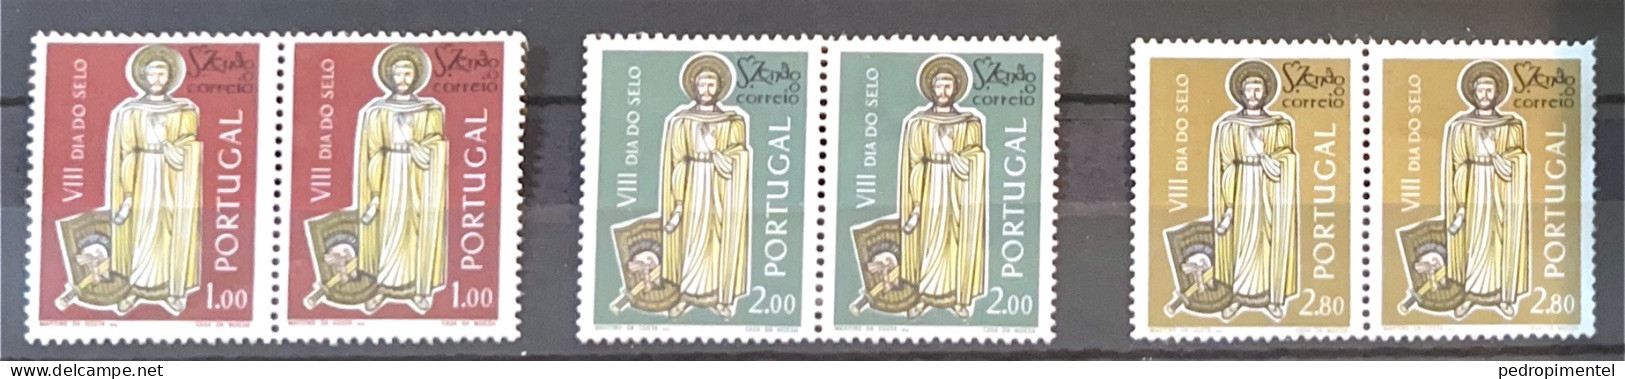 Portugal 1962 "Saint Zenon" Condition MNH #901-903 (pair) - Unused Stamps